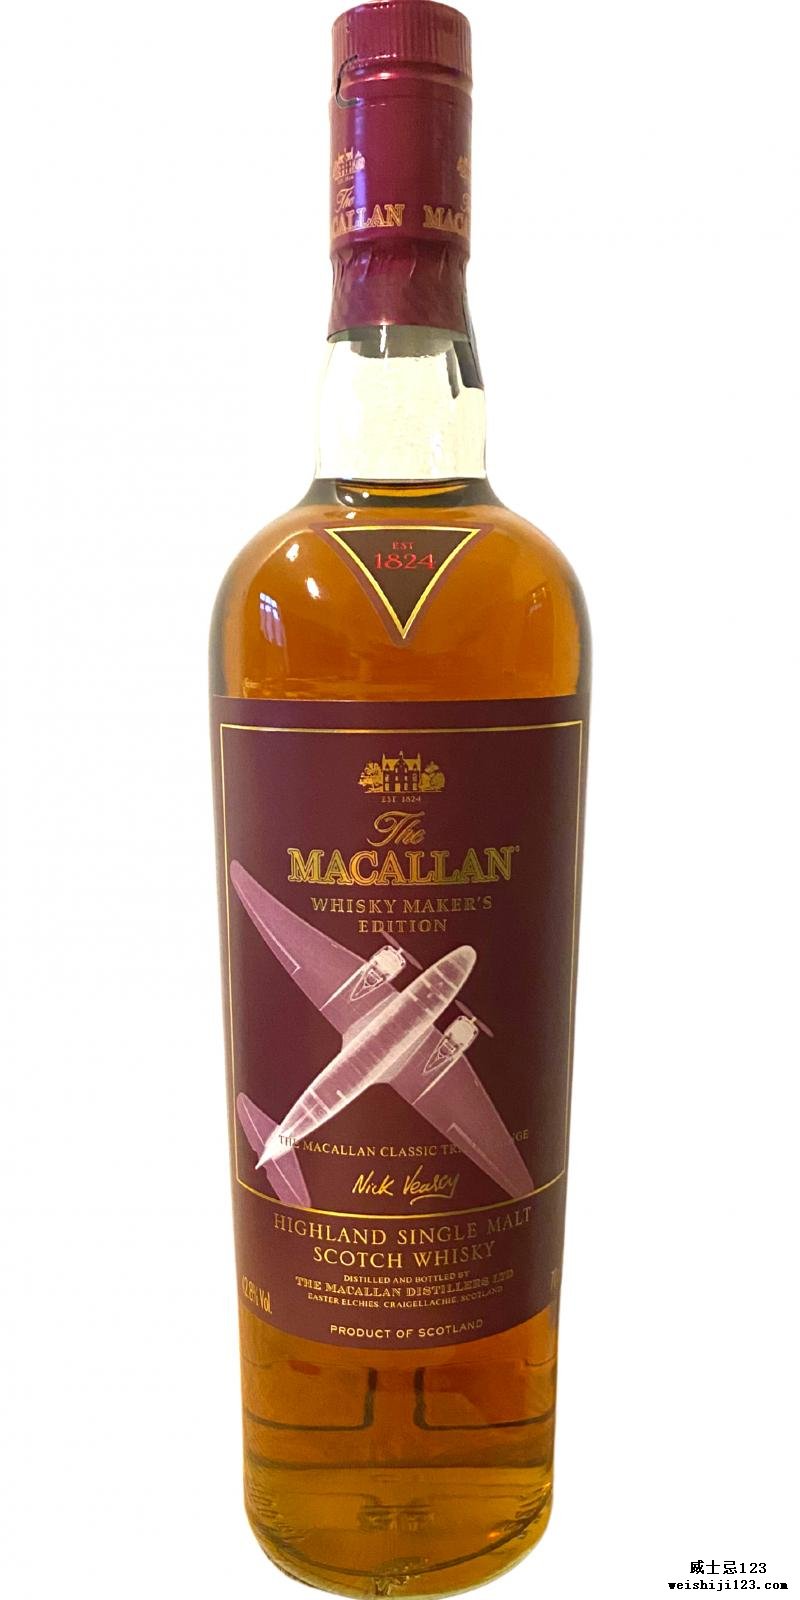 Macallan Whisky Maker's Edition - 1930s Propeller Plane